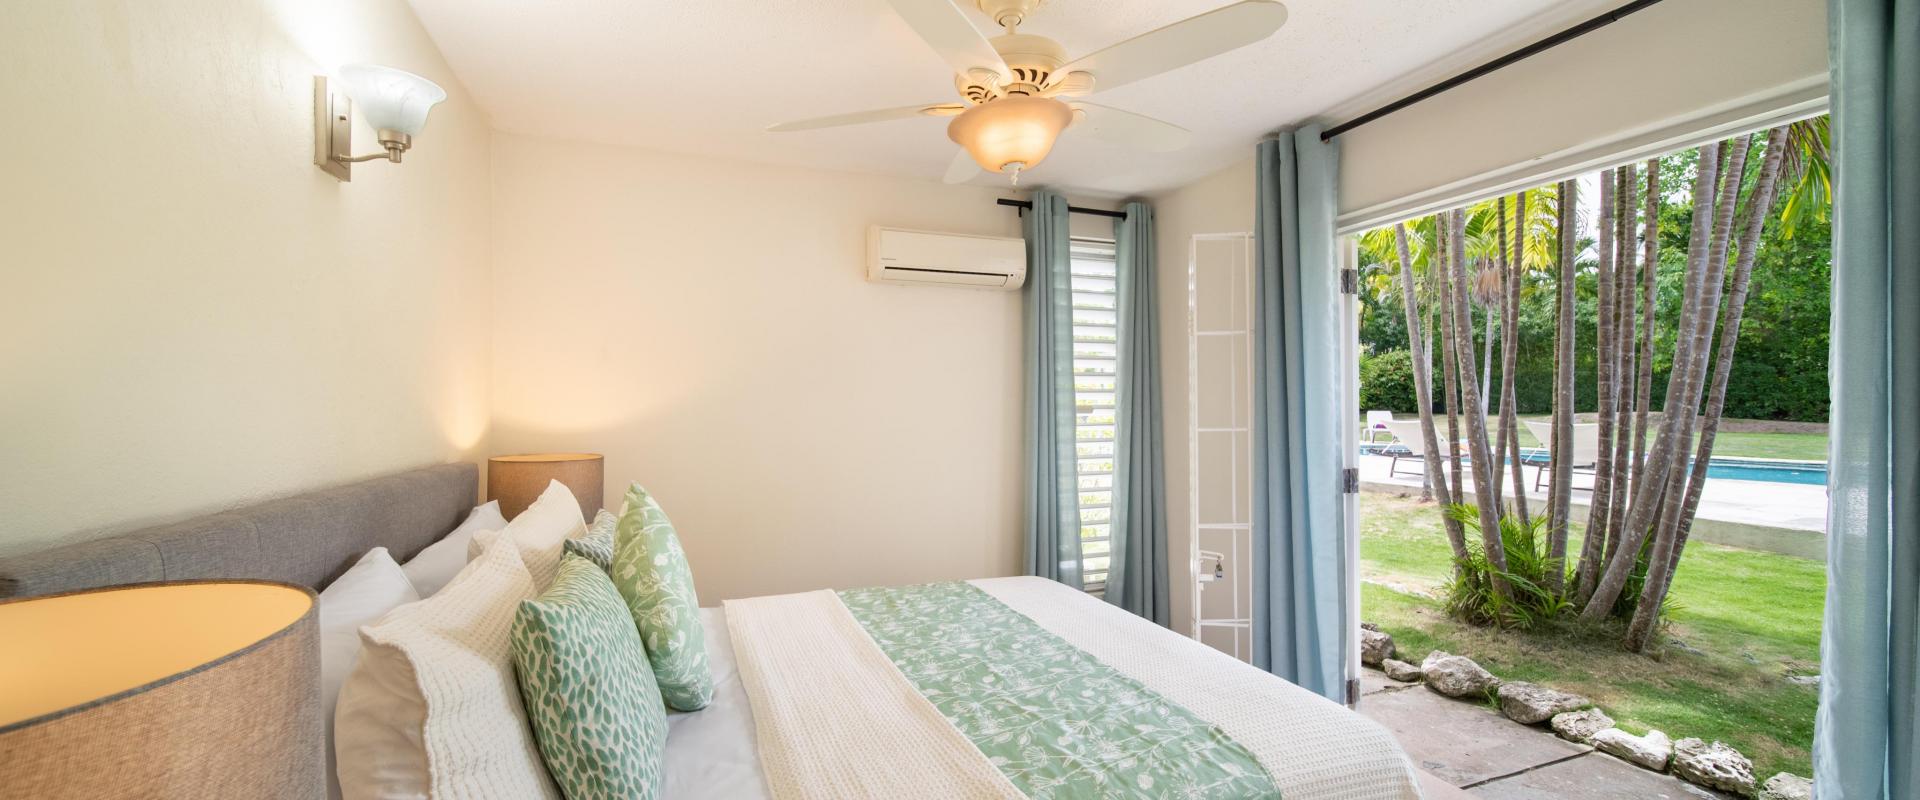 149 Salters Road Barbados Holiday Rental Sandy Lane Barbados Bedroom 3 with Patio to Pool Deck